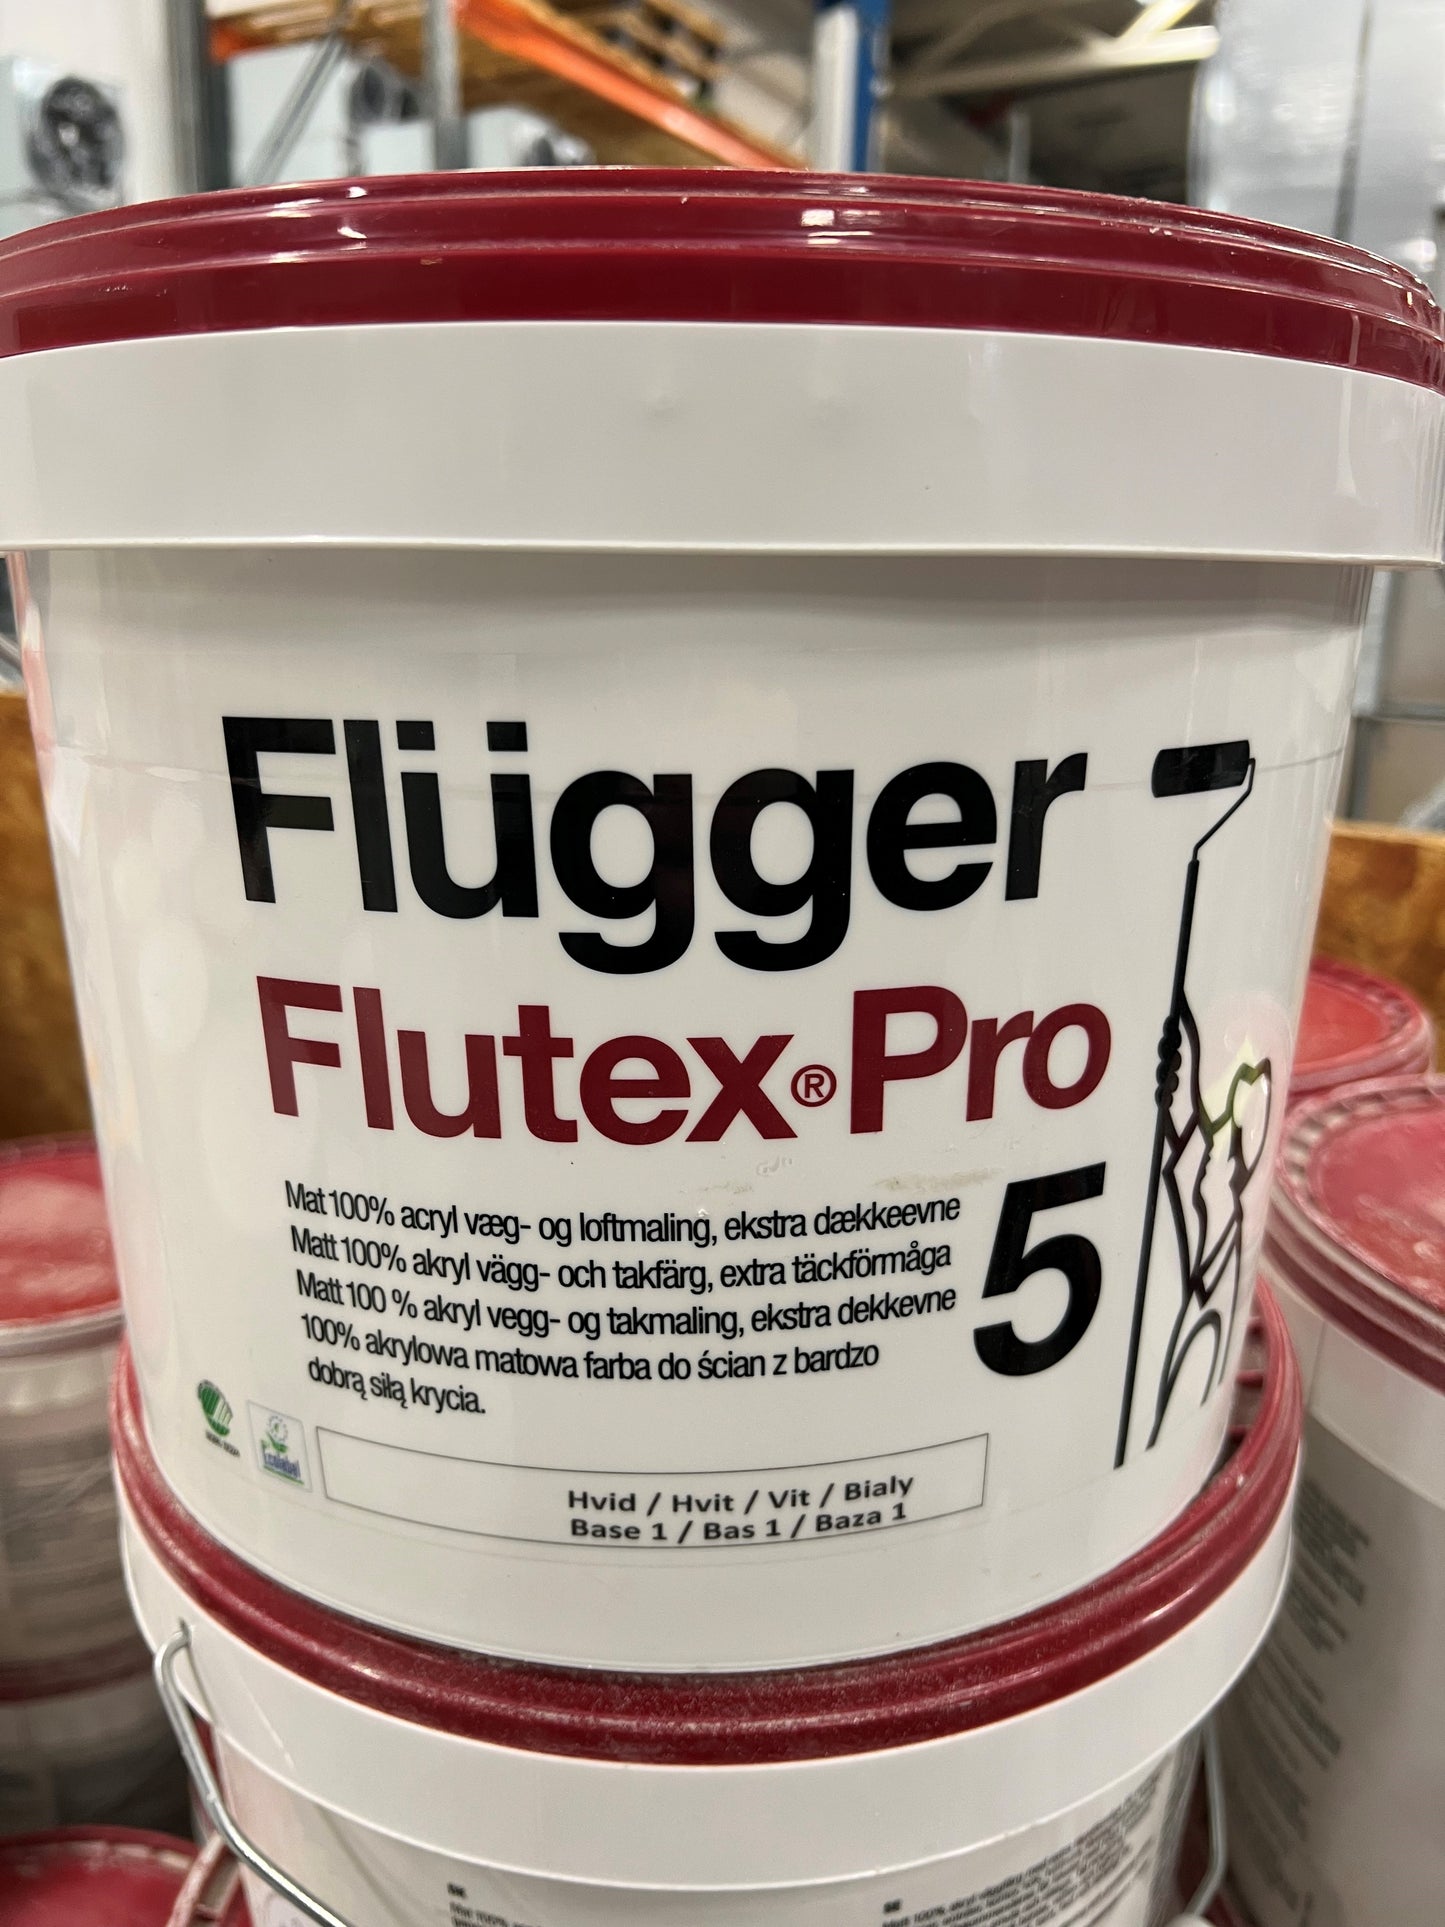 Flugger Flutex Pro 5